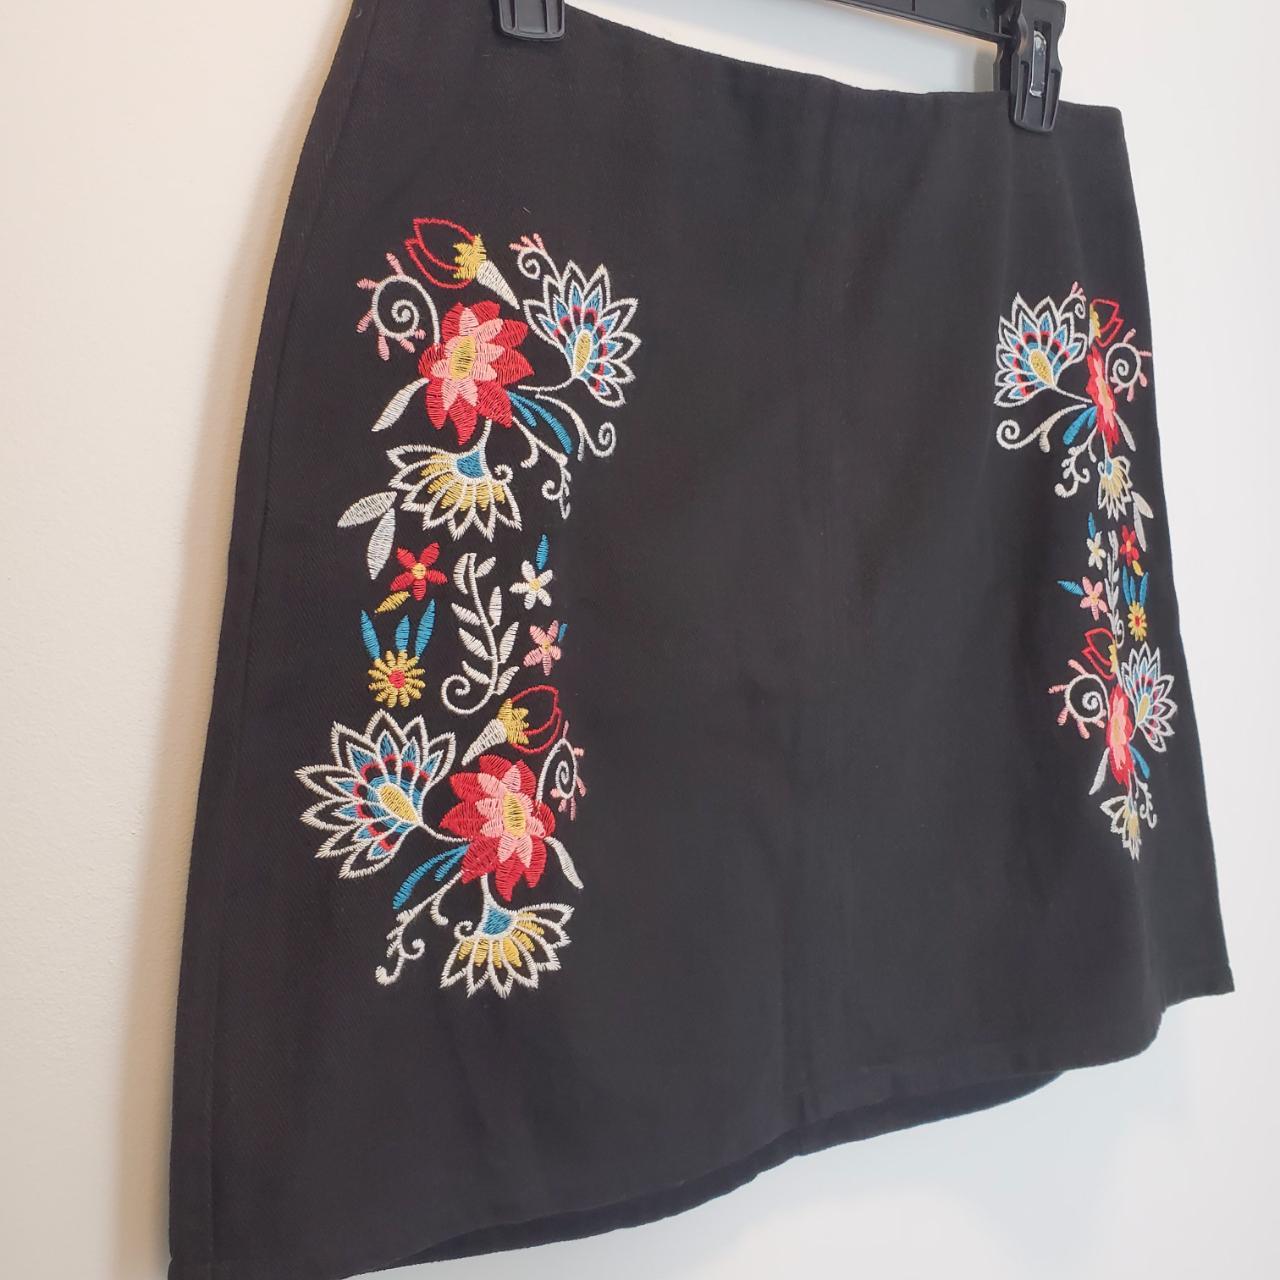 Mi ami Embroidered Floral Black Mini Skirt... - Depop